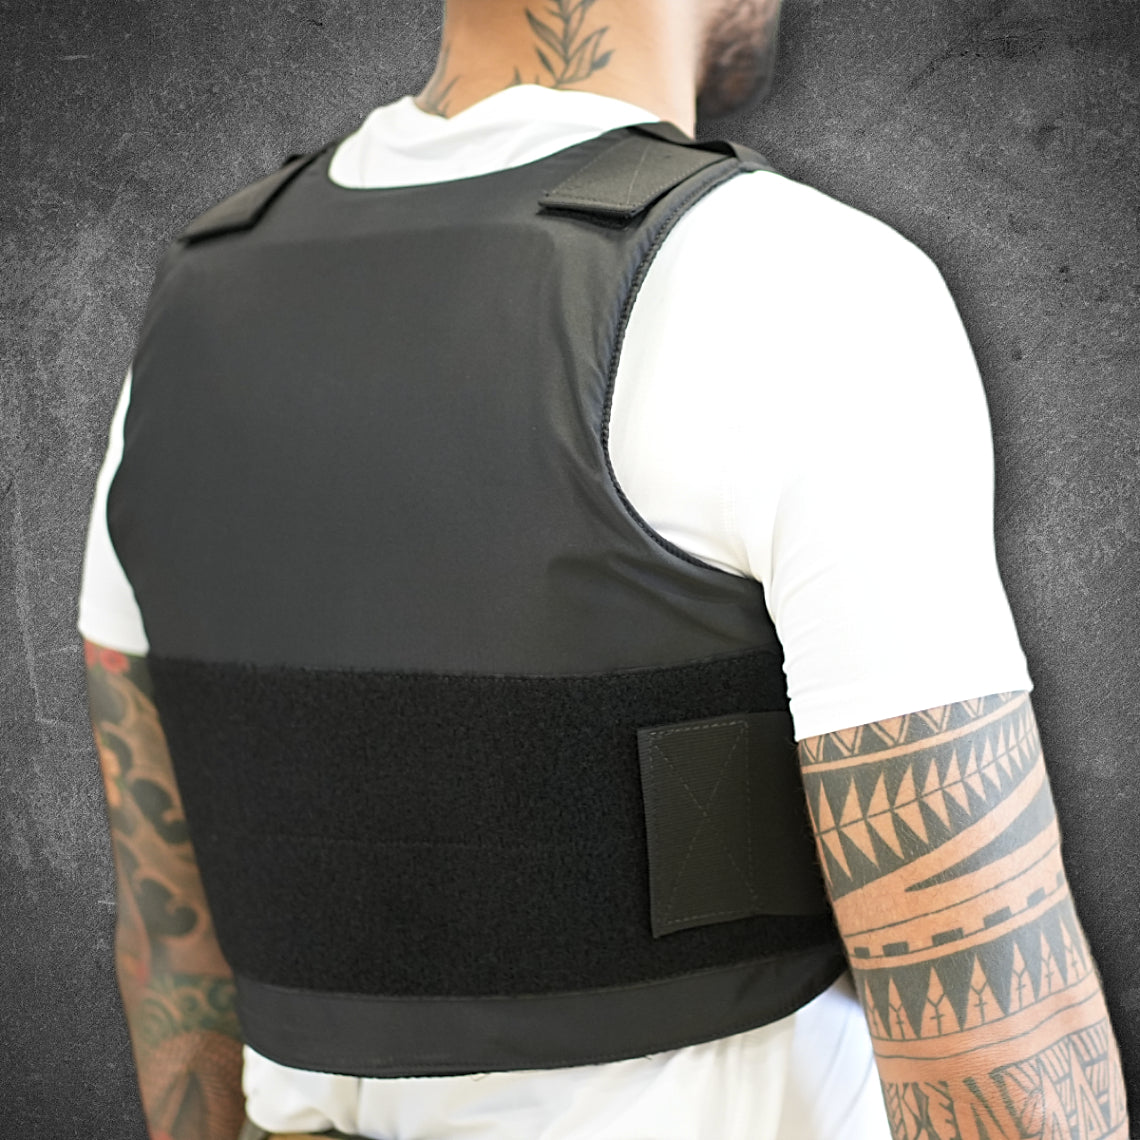 Bullet Proof Vests, Covert Body Armor